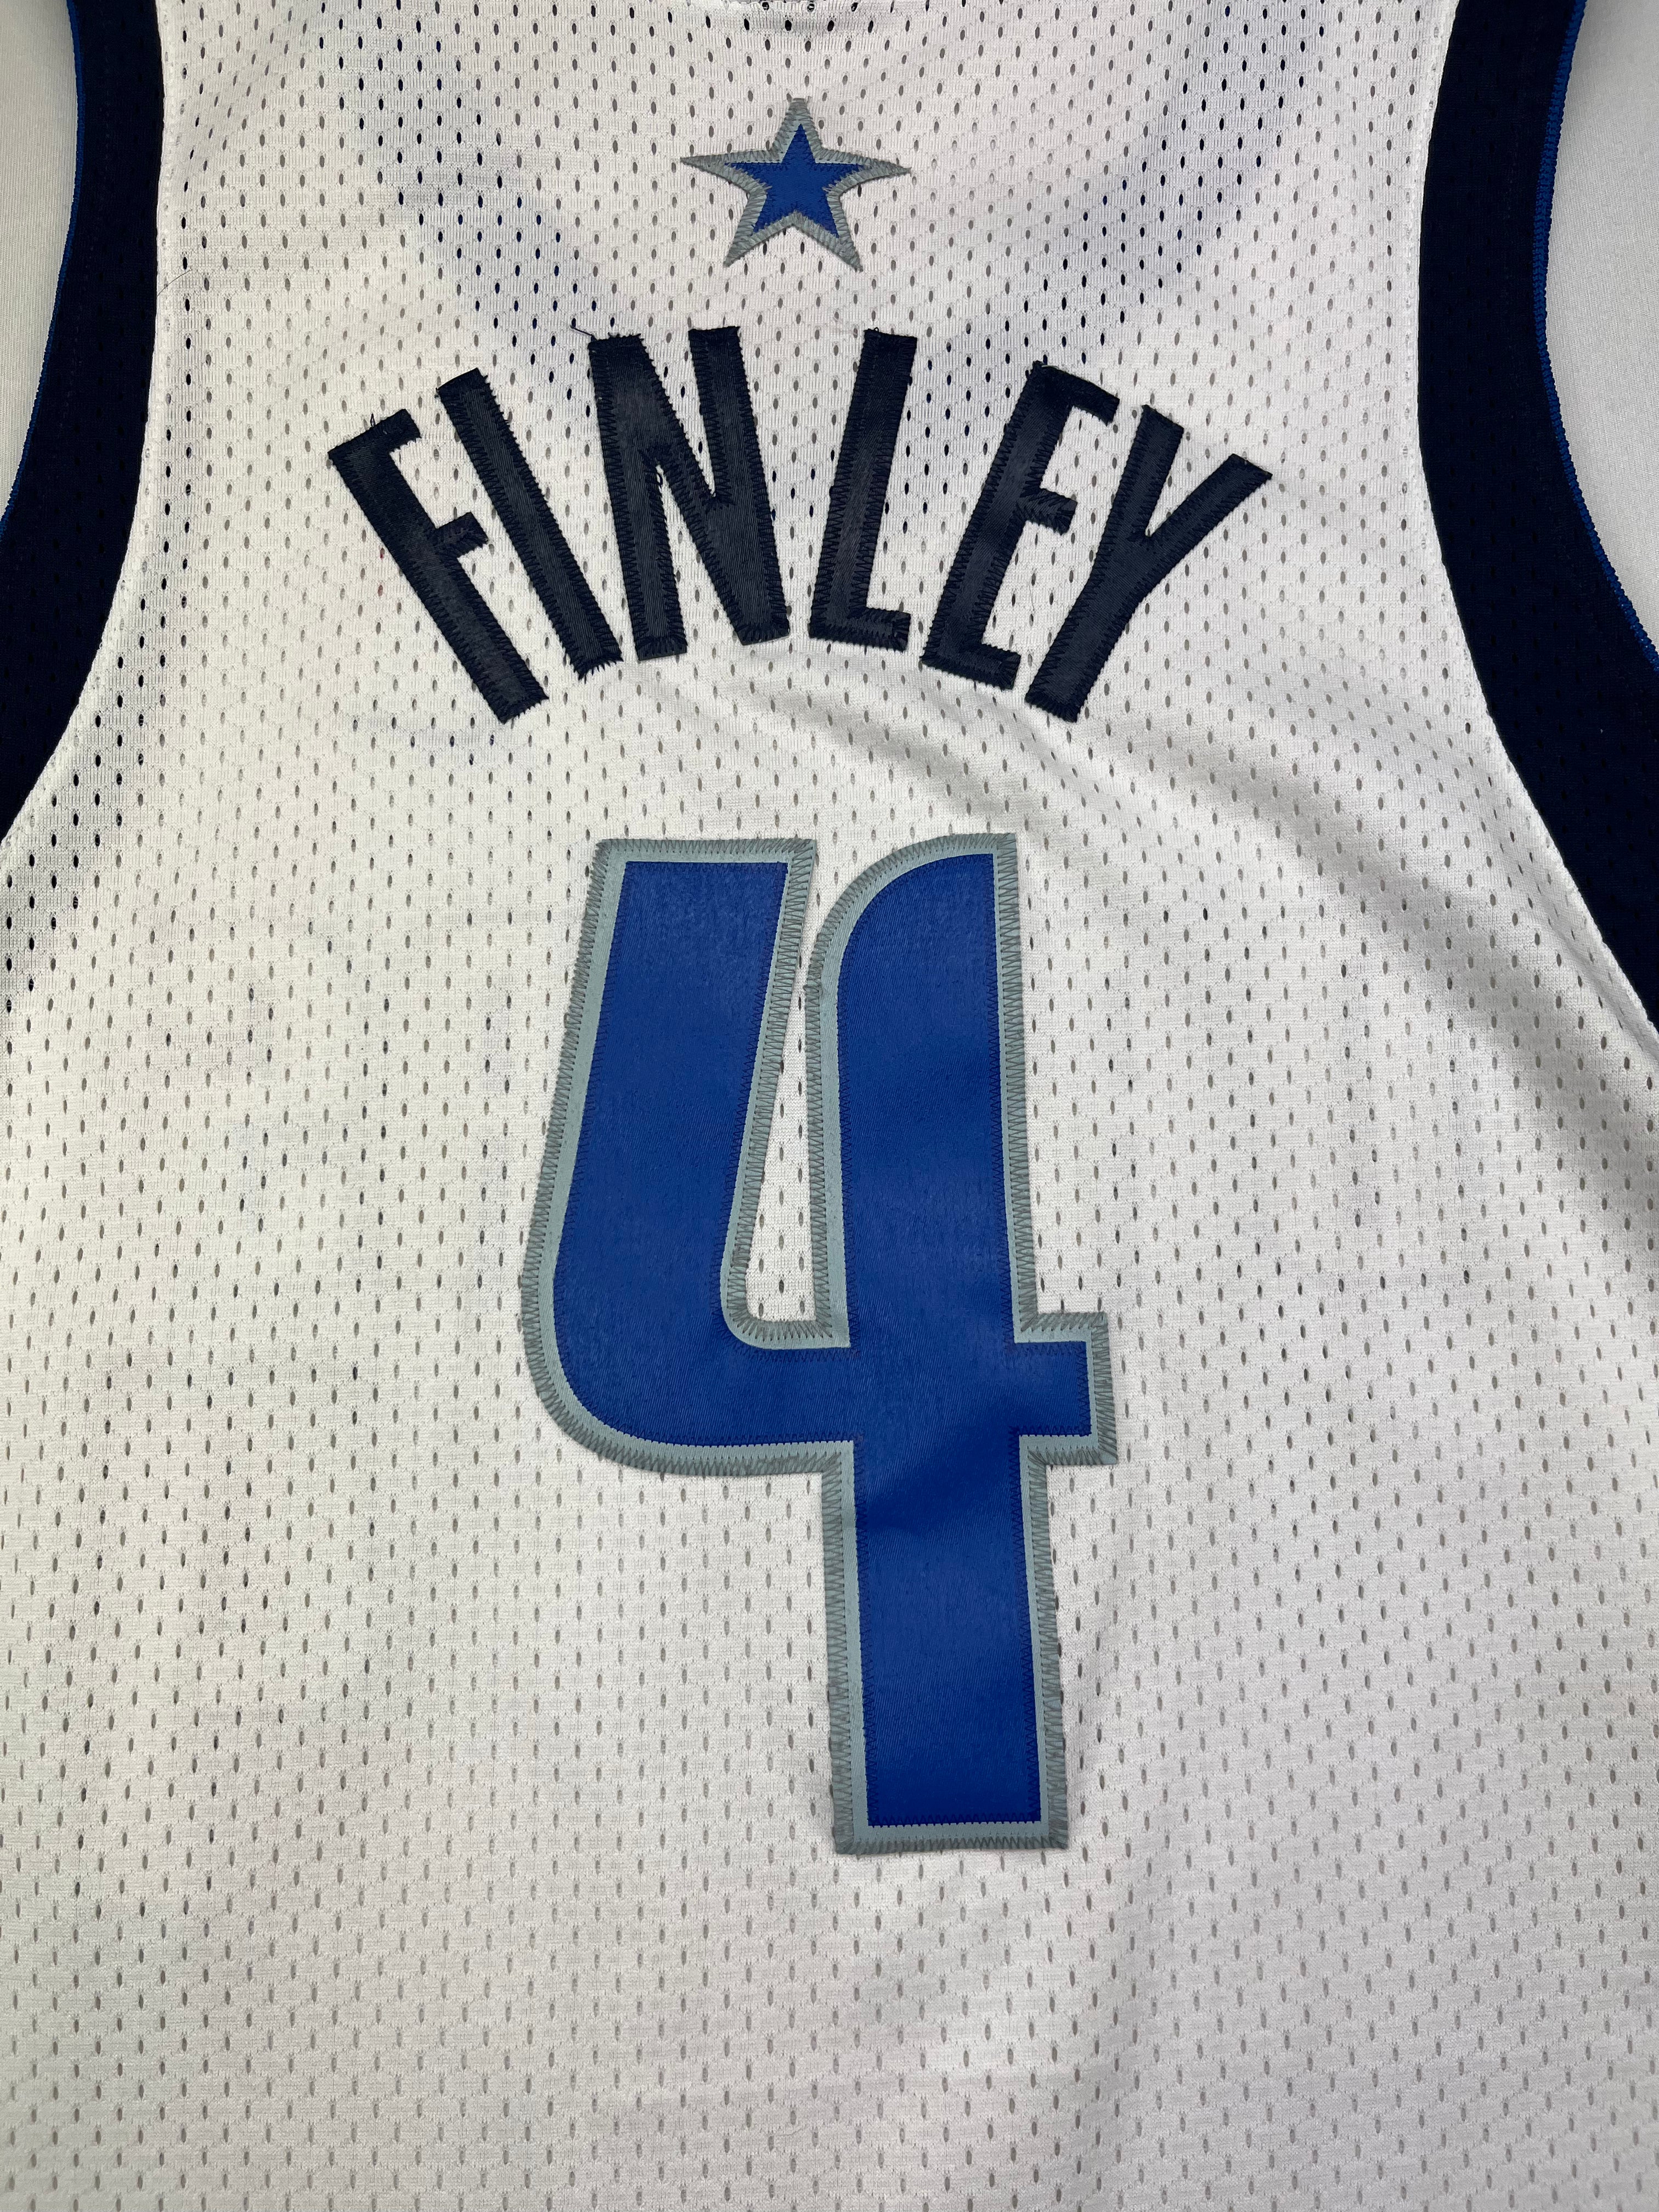 2001-04 Dallas Mavericks Nike Home Jersey Finley #4 (XXL) 9/10